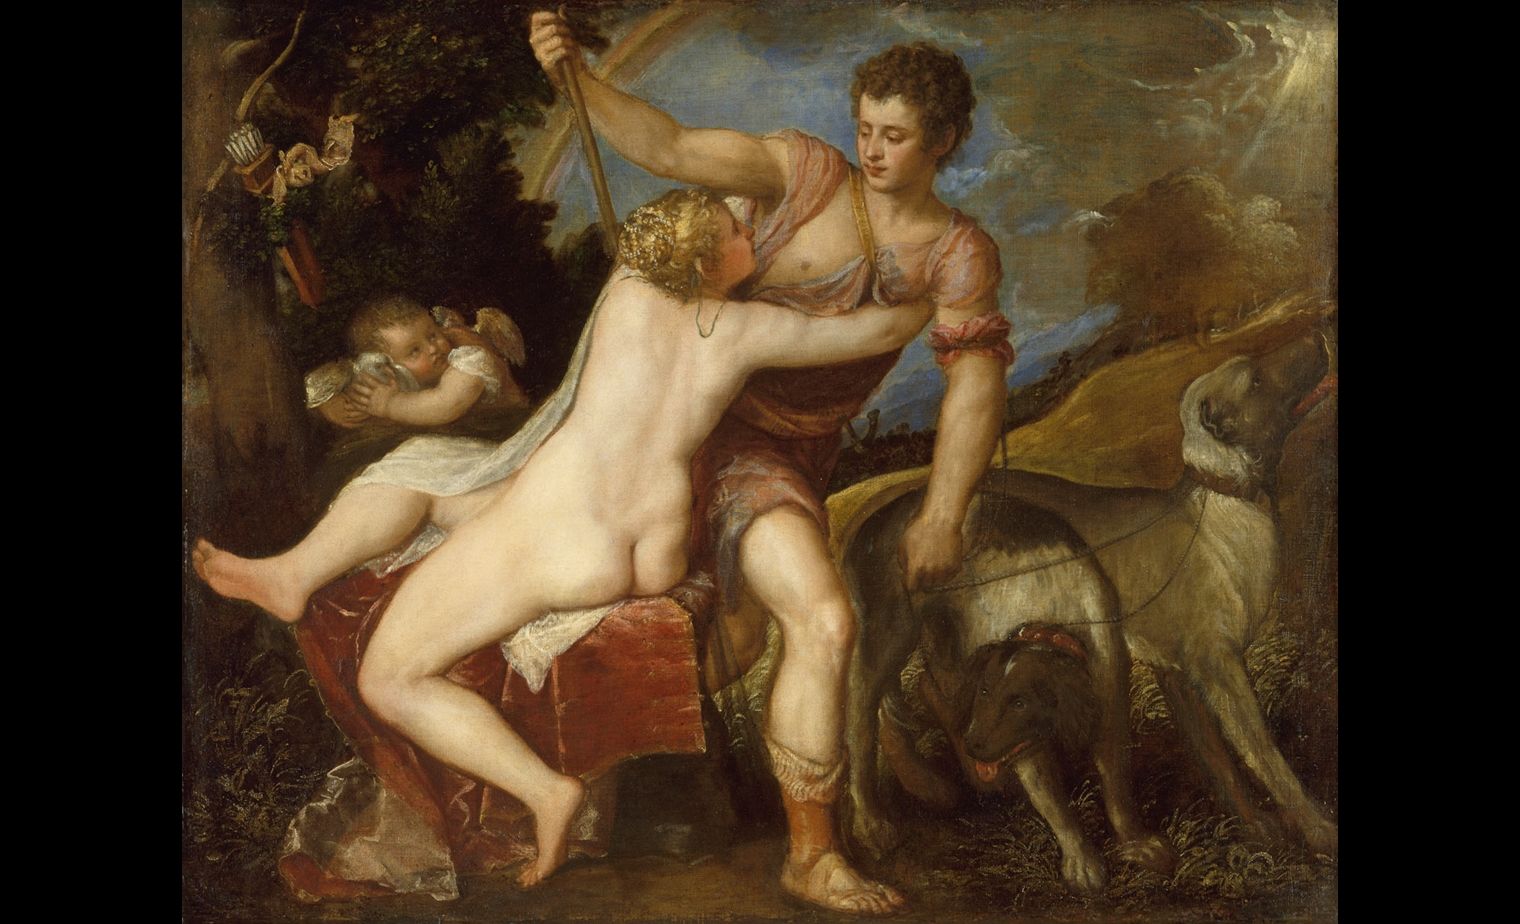 Titian painting depicting Venus and Adonis